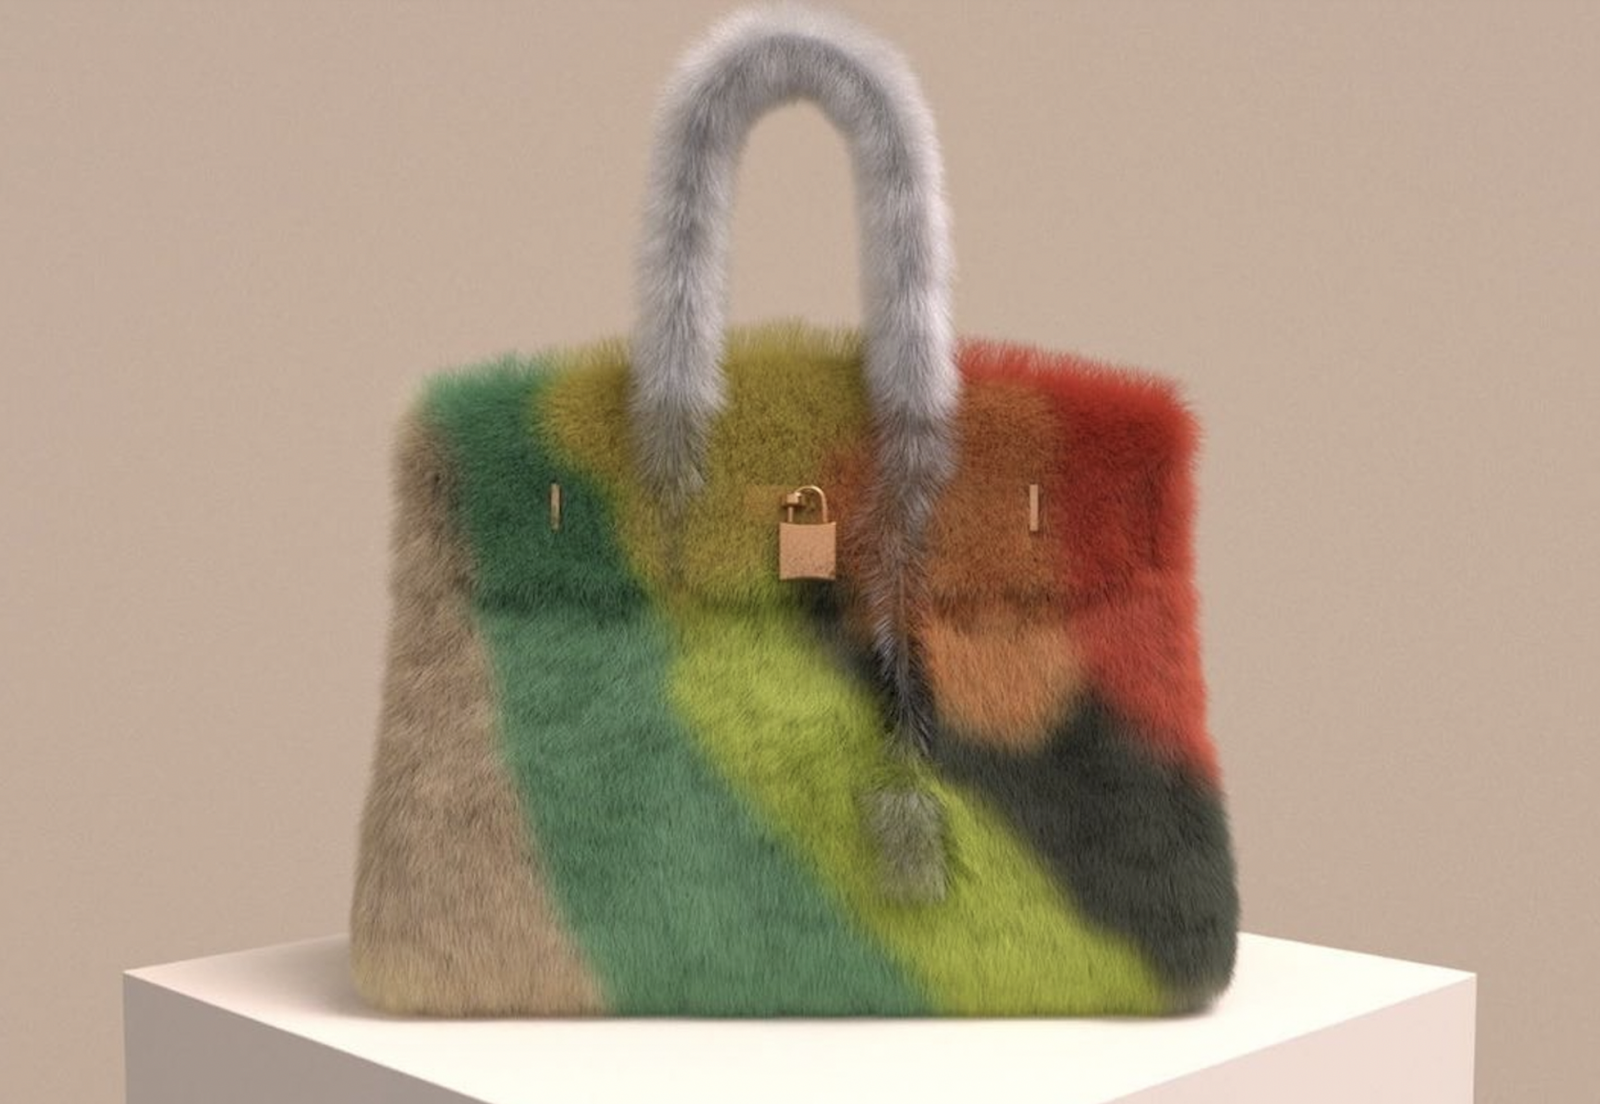 An image of a furry handbag tied to a MetaBirkin NFT